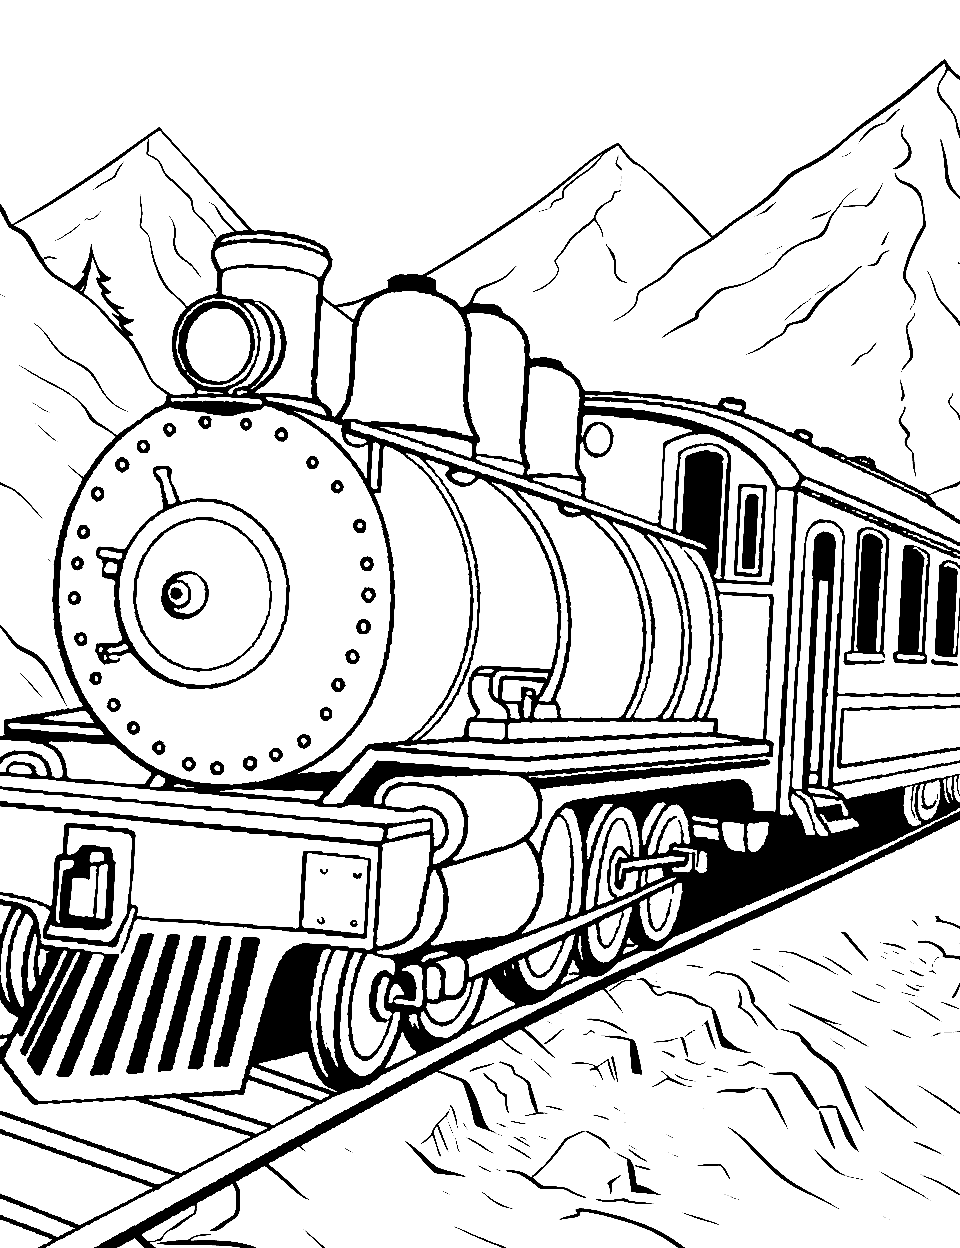 Mountain Climbing Train Coloring Page - A train going through a scenic mountain path.